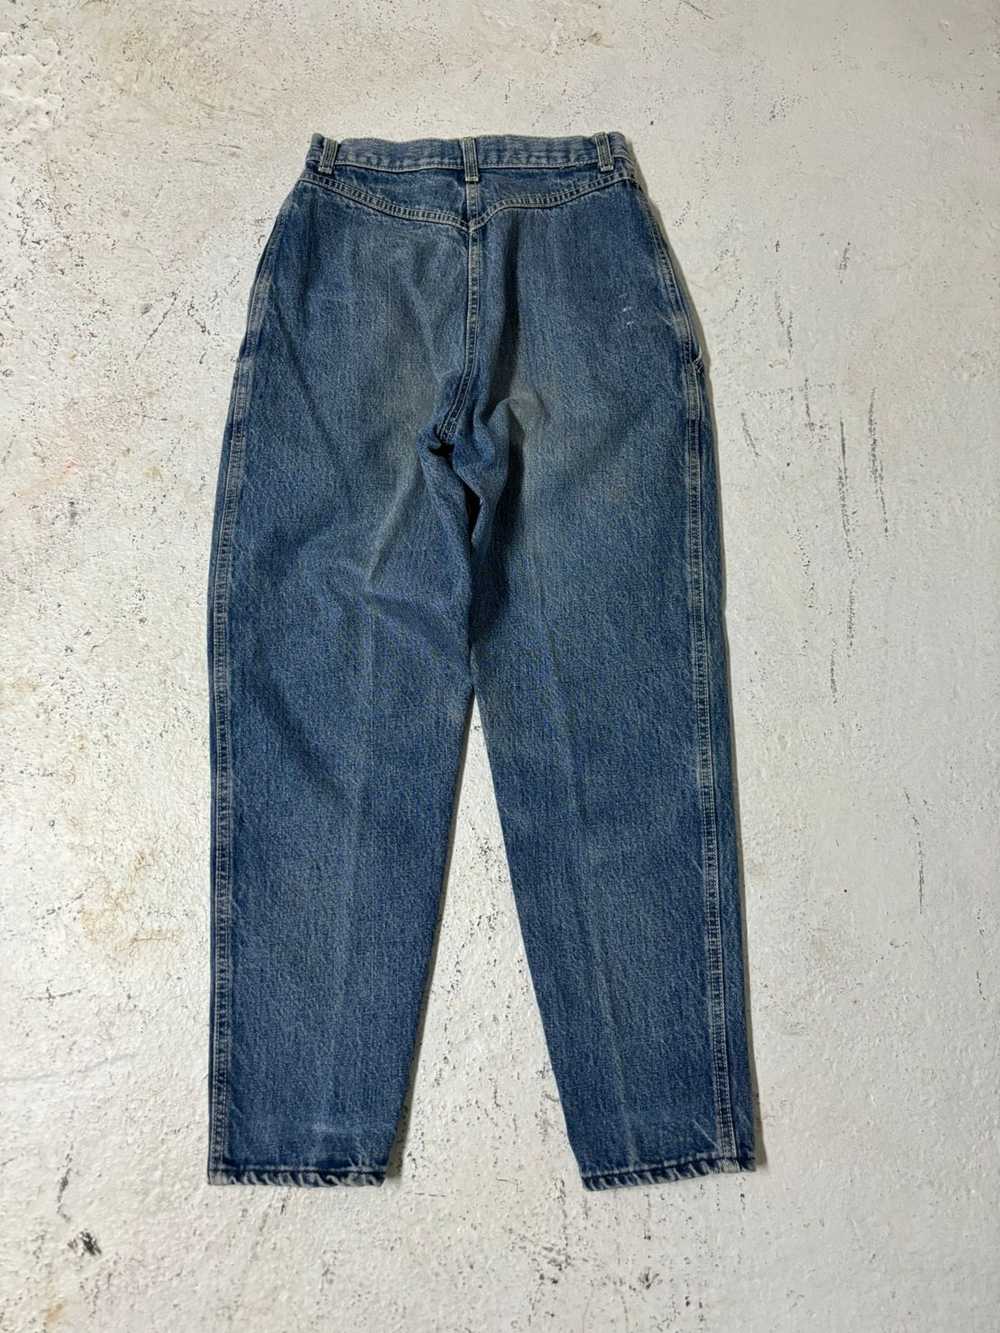 Vintage Vintage 90s gitano jeans - image 2